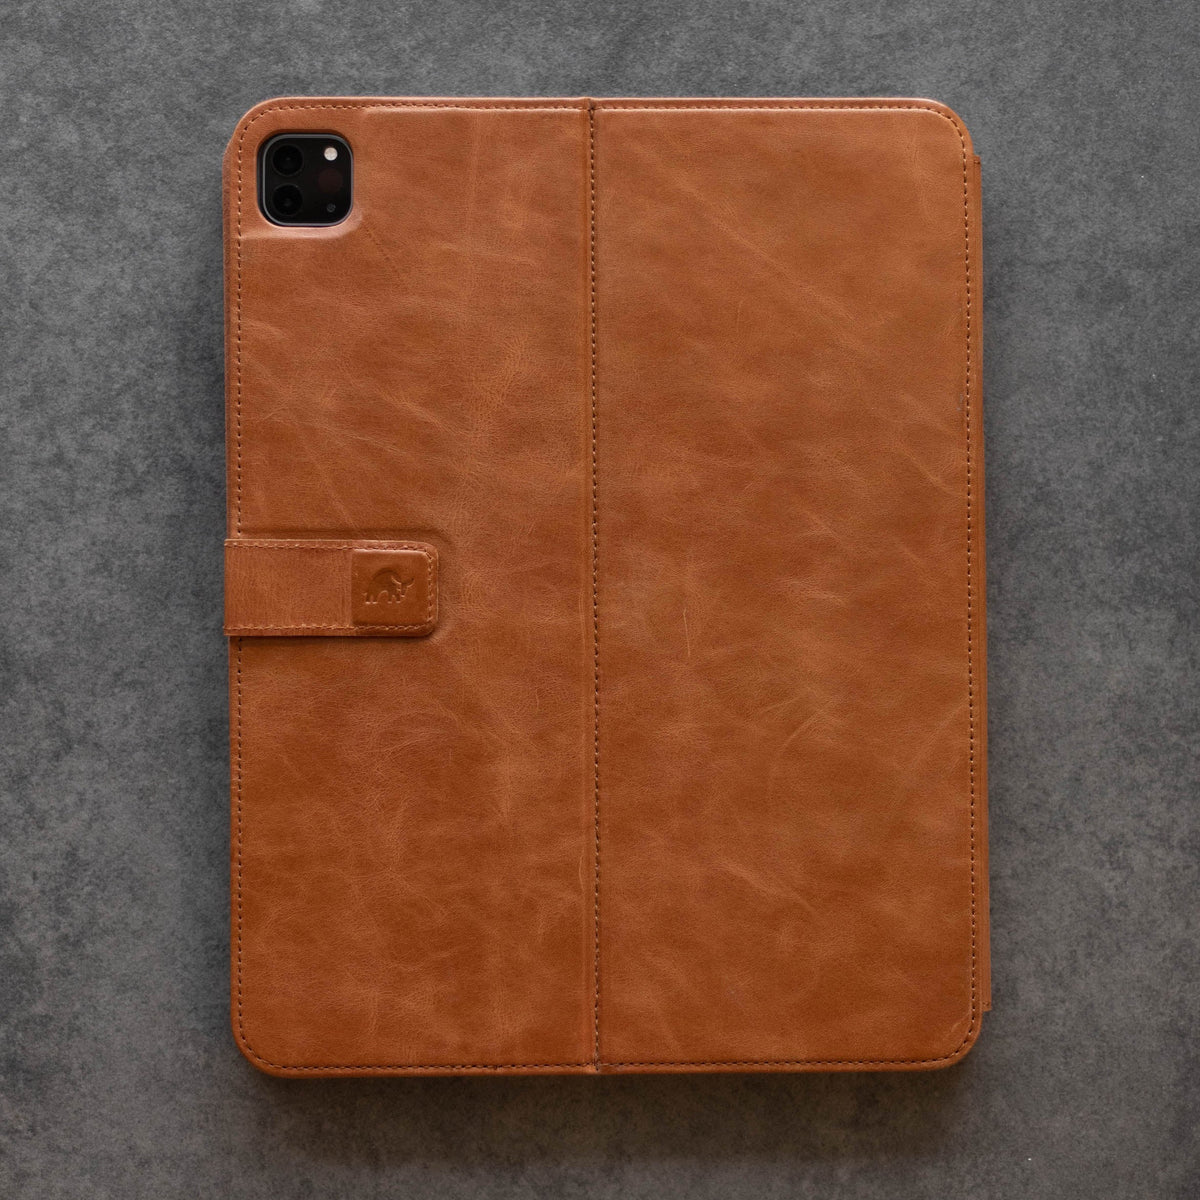 Bullstrap Premium Full-Grain Leather iPad Case with Magnetic Adjustable Stand, Auto Sleep/Wake, iPad Pro 12.9, Sienna Brown